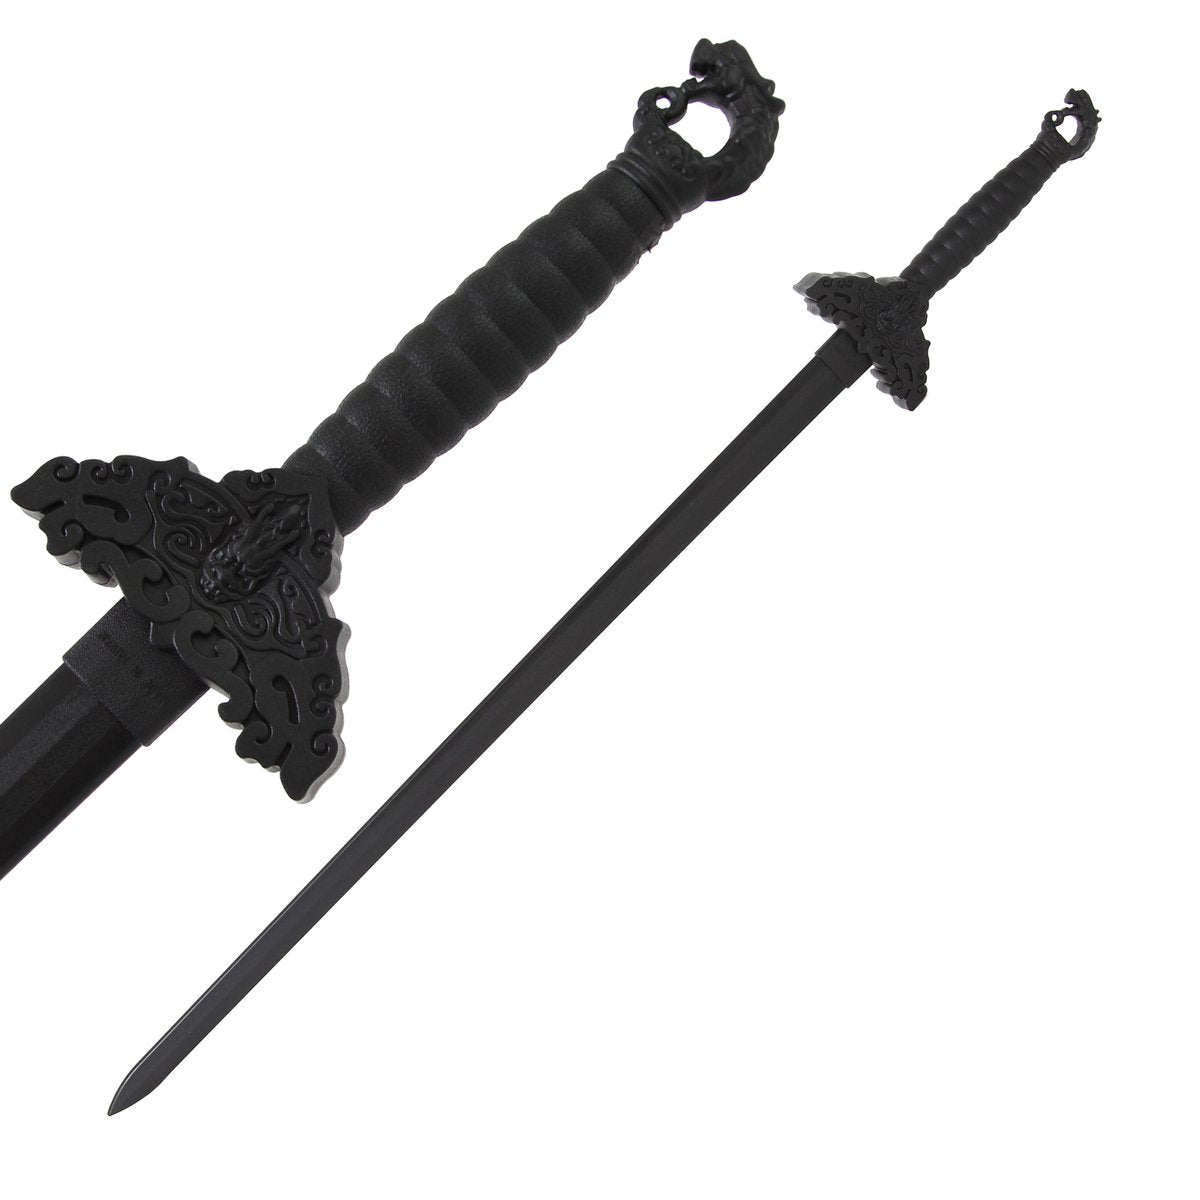 34-1/2-Inch Length Polypropylene Black BladesUSA 1606PP Martial Arts Training Broad Sword 